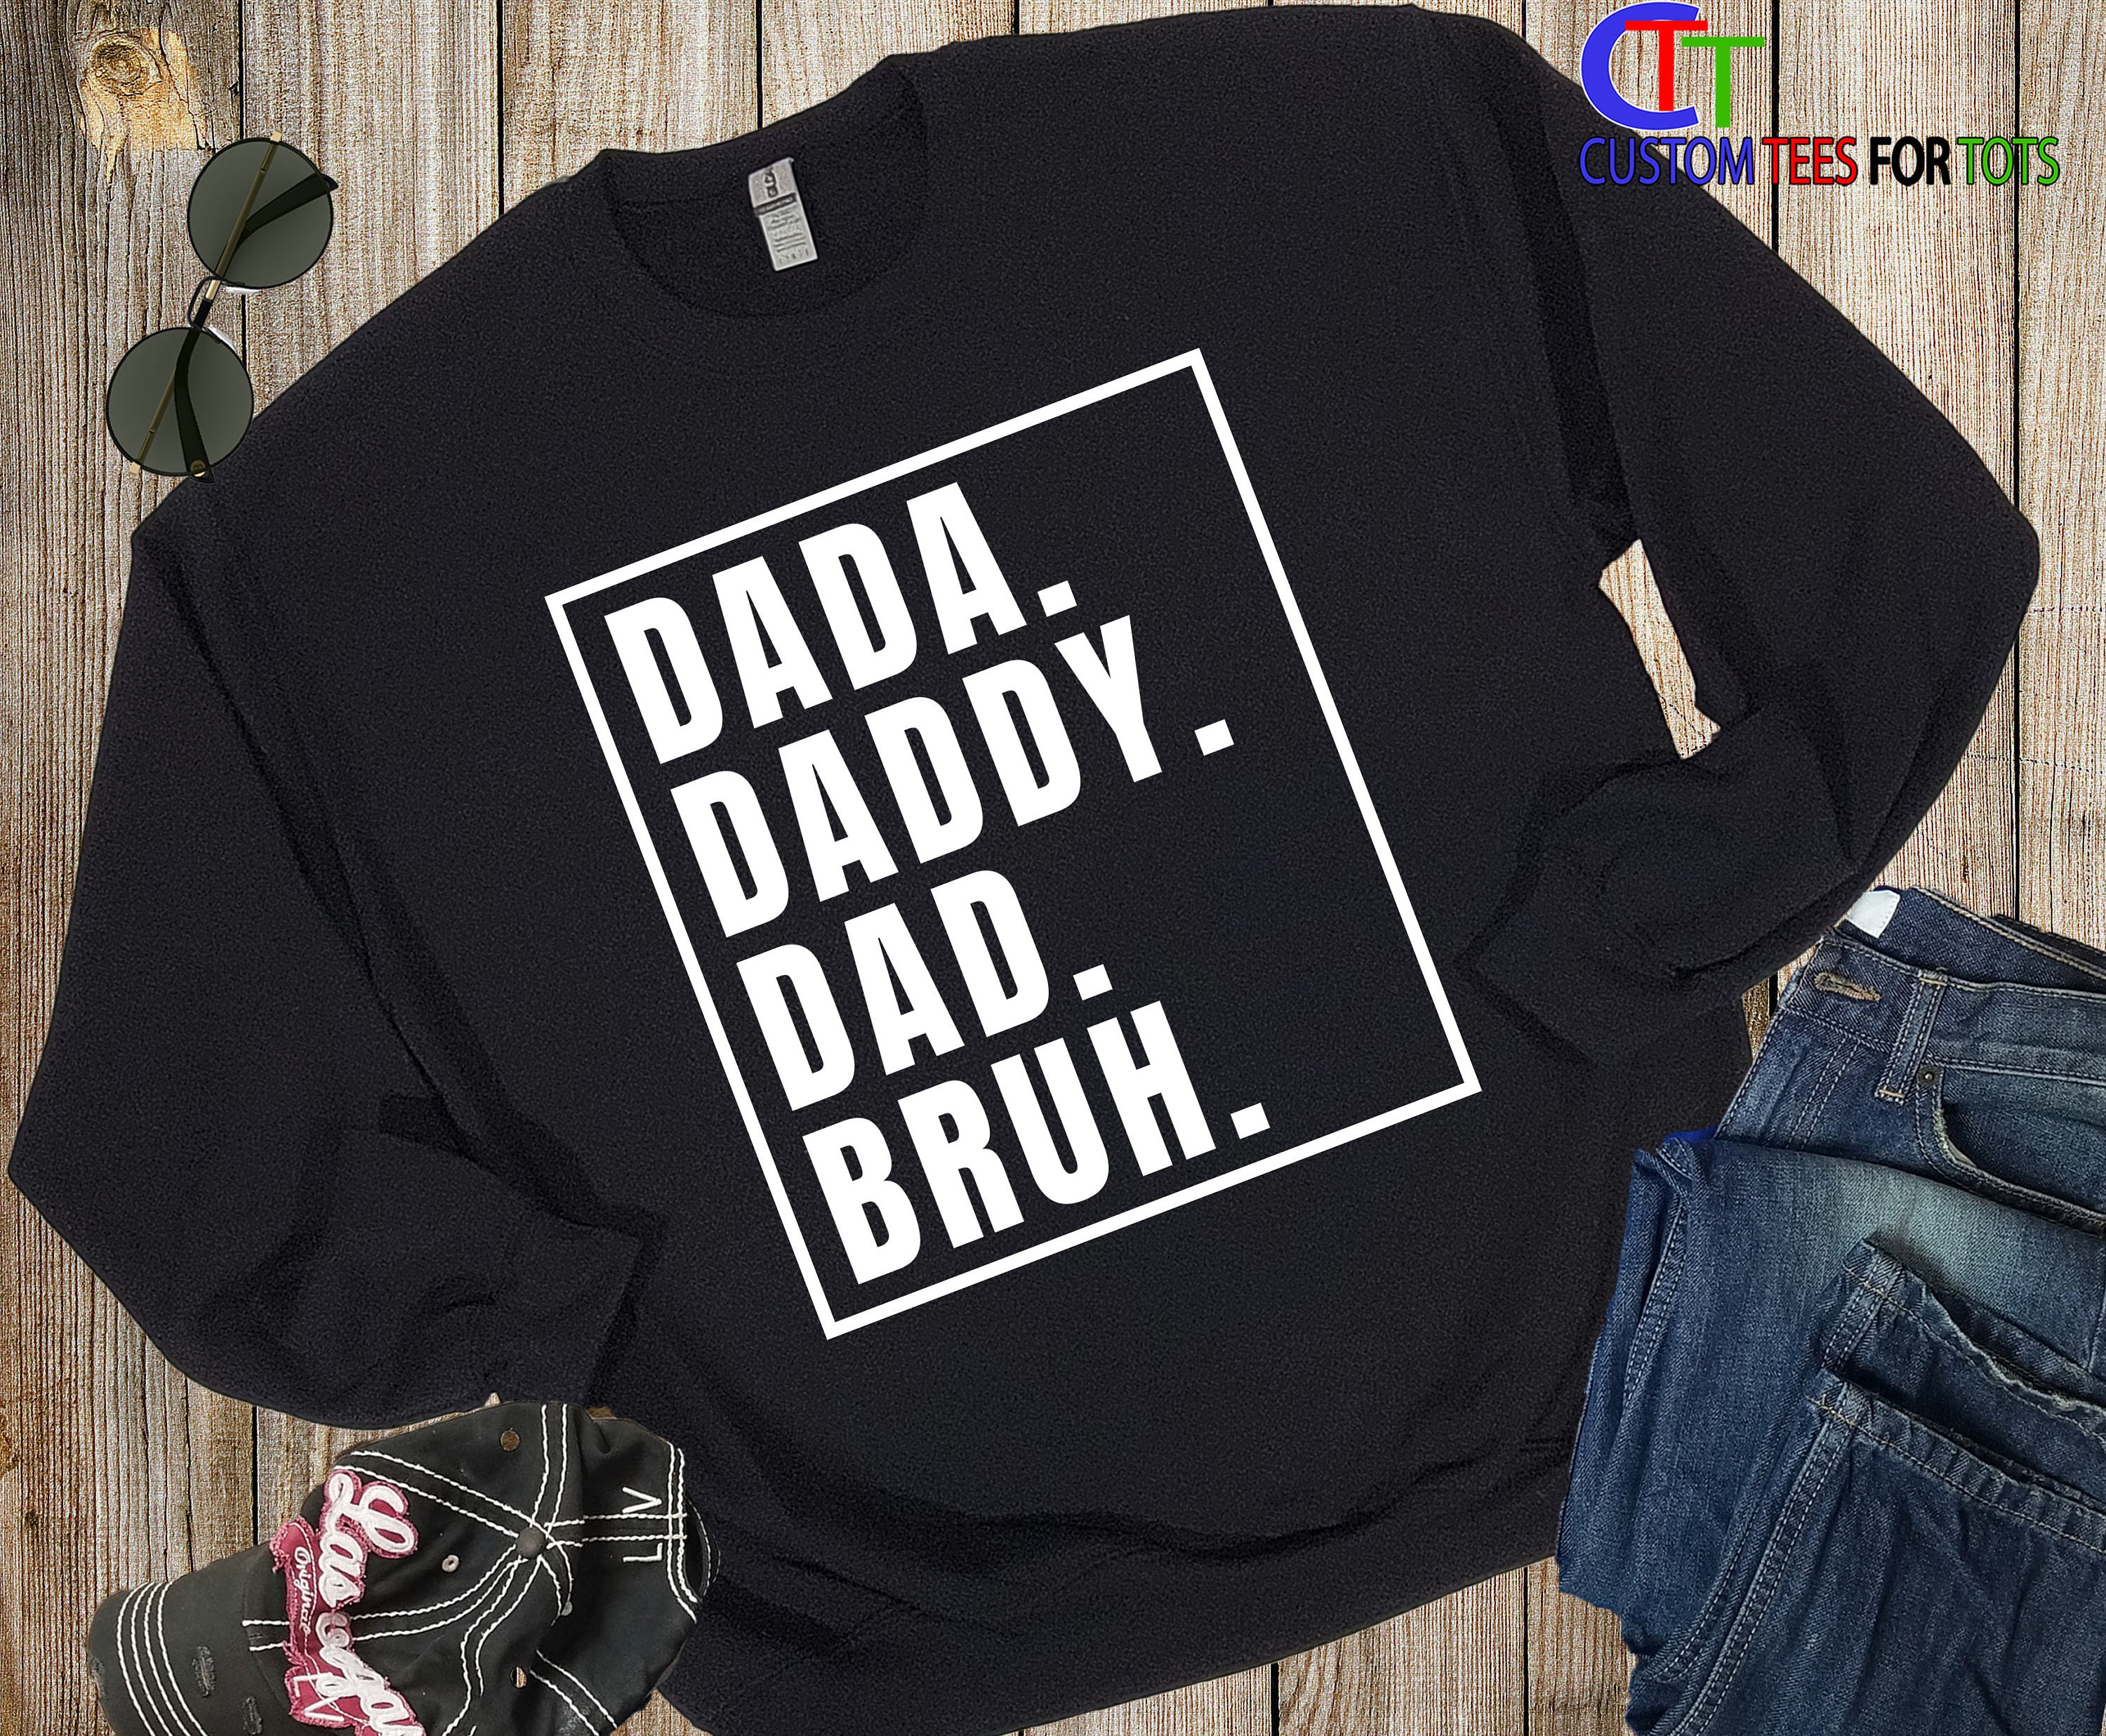 Happy Dad Buffalo NY New York shirt, hoodie, sweater, long sleeve